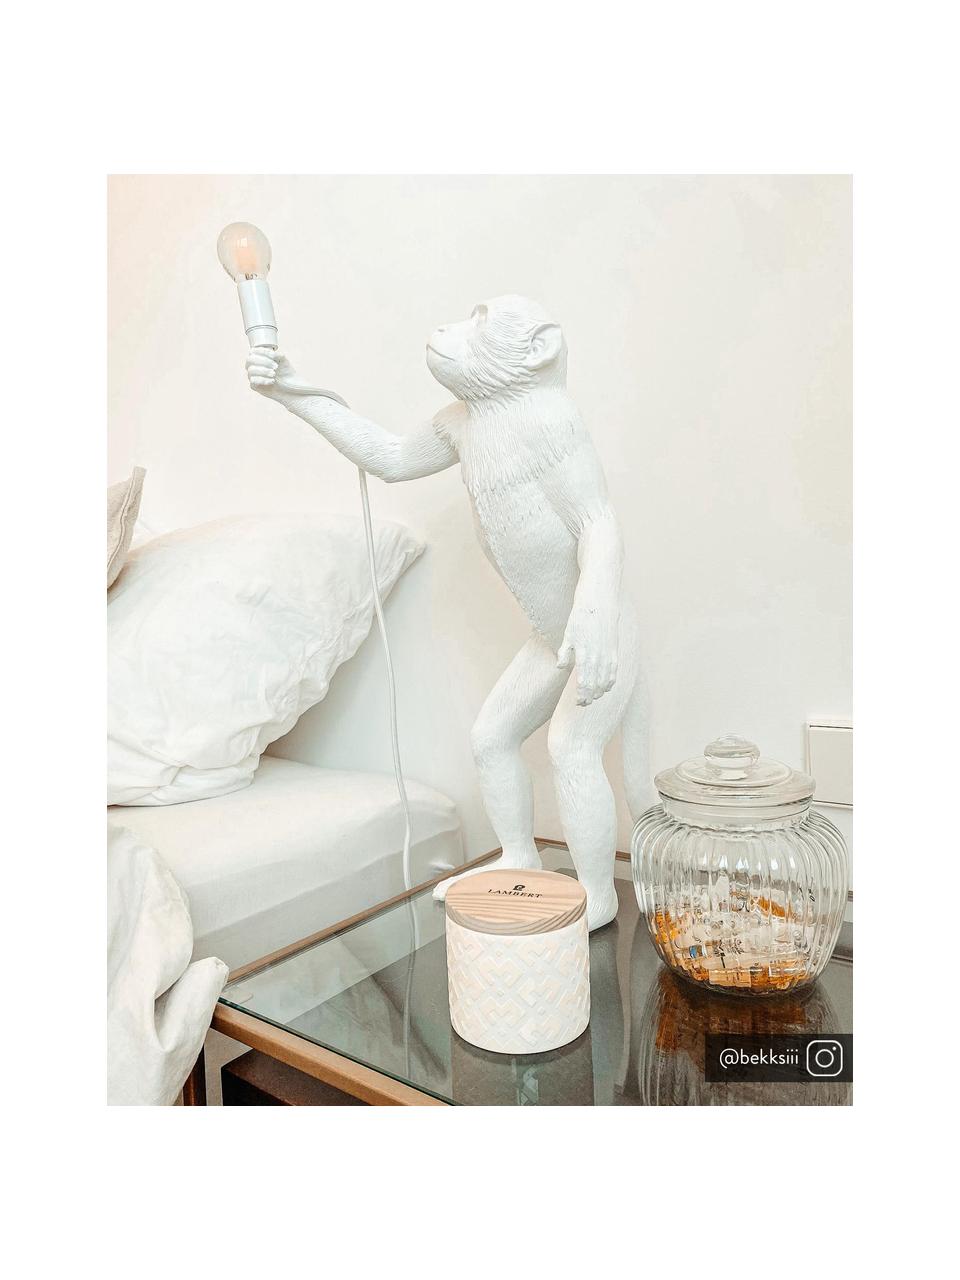 Lampada da tavolo di design Monkey, Lampada: resina sintetica, Bianco, Larg. 46 x Alt. 54 cm